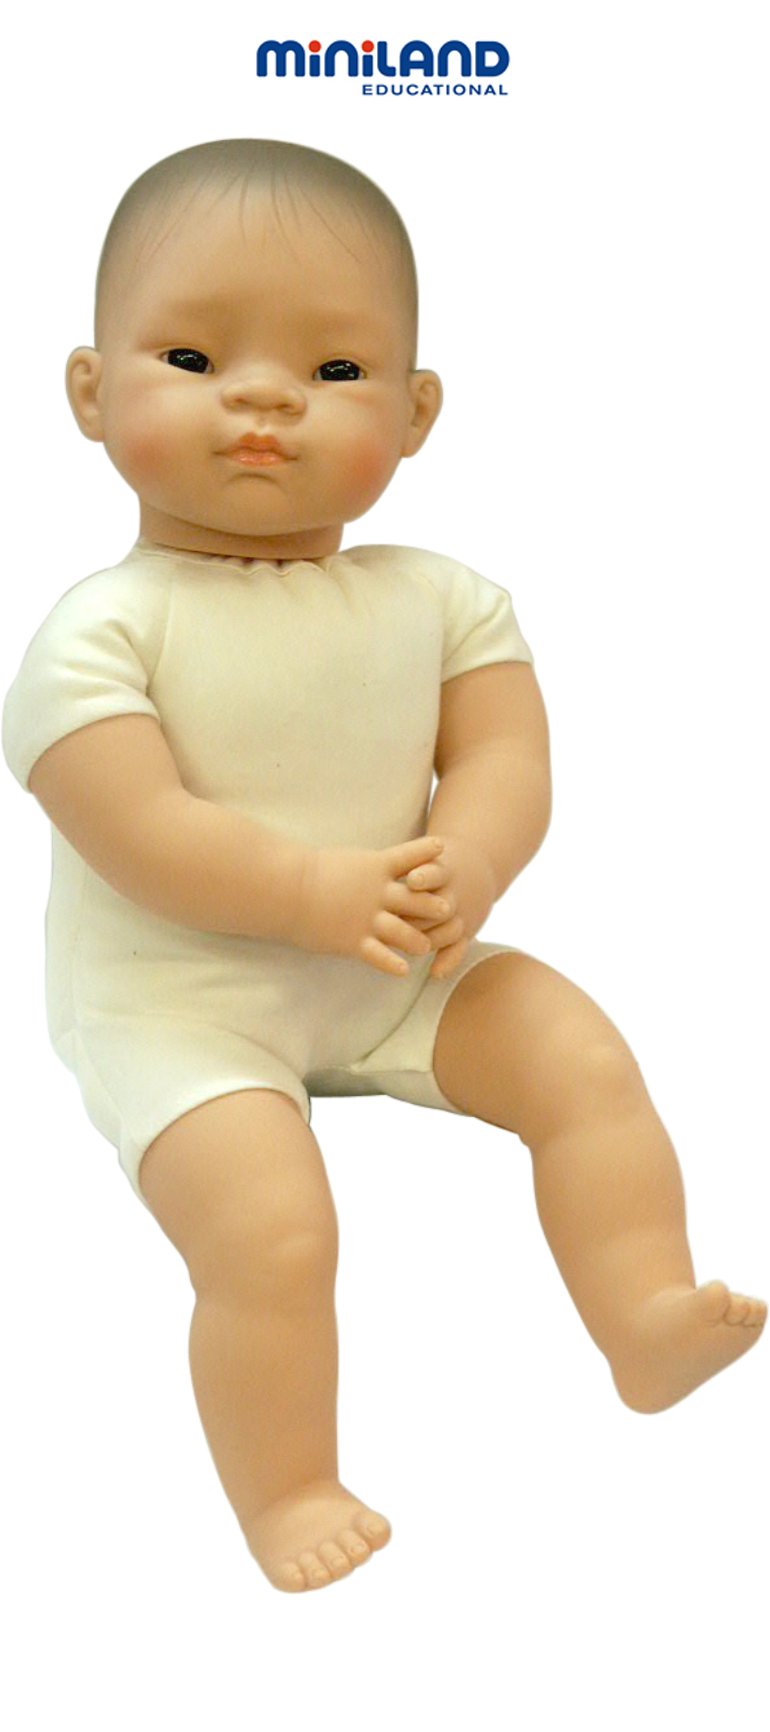 Miniland Educational 31065 Soft Body Asian Baby Doll (40cm- 15 6/8&apos;&apos;)polybag